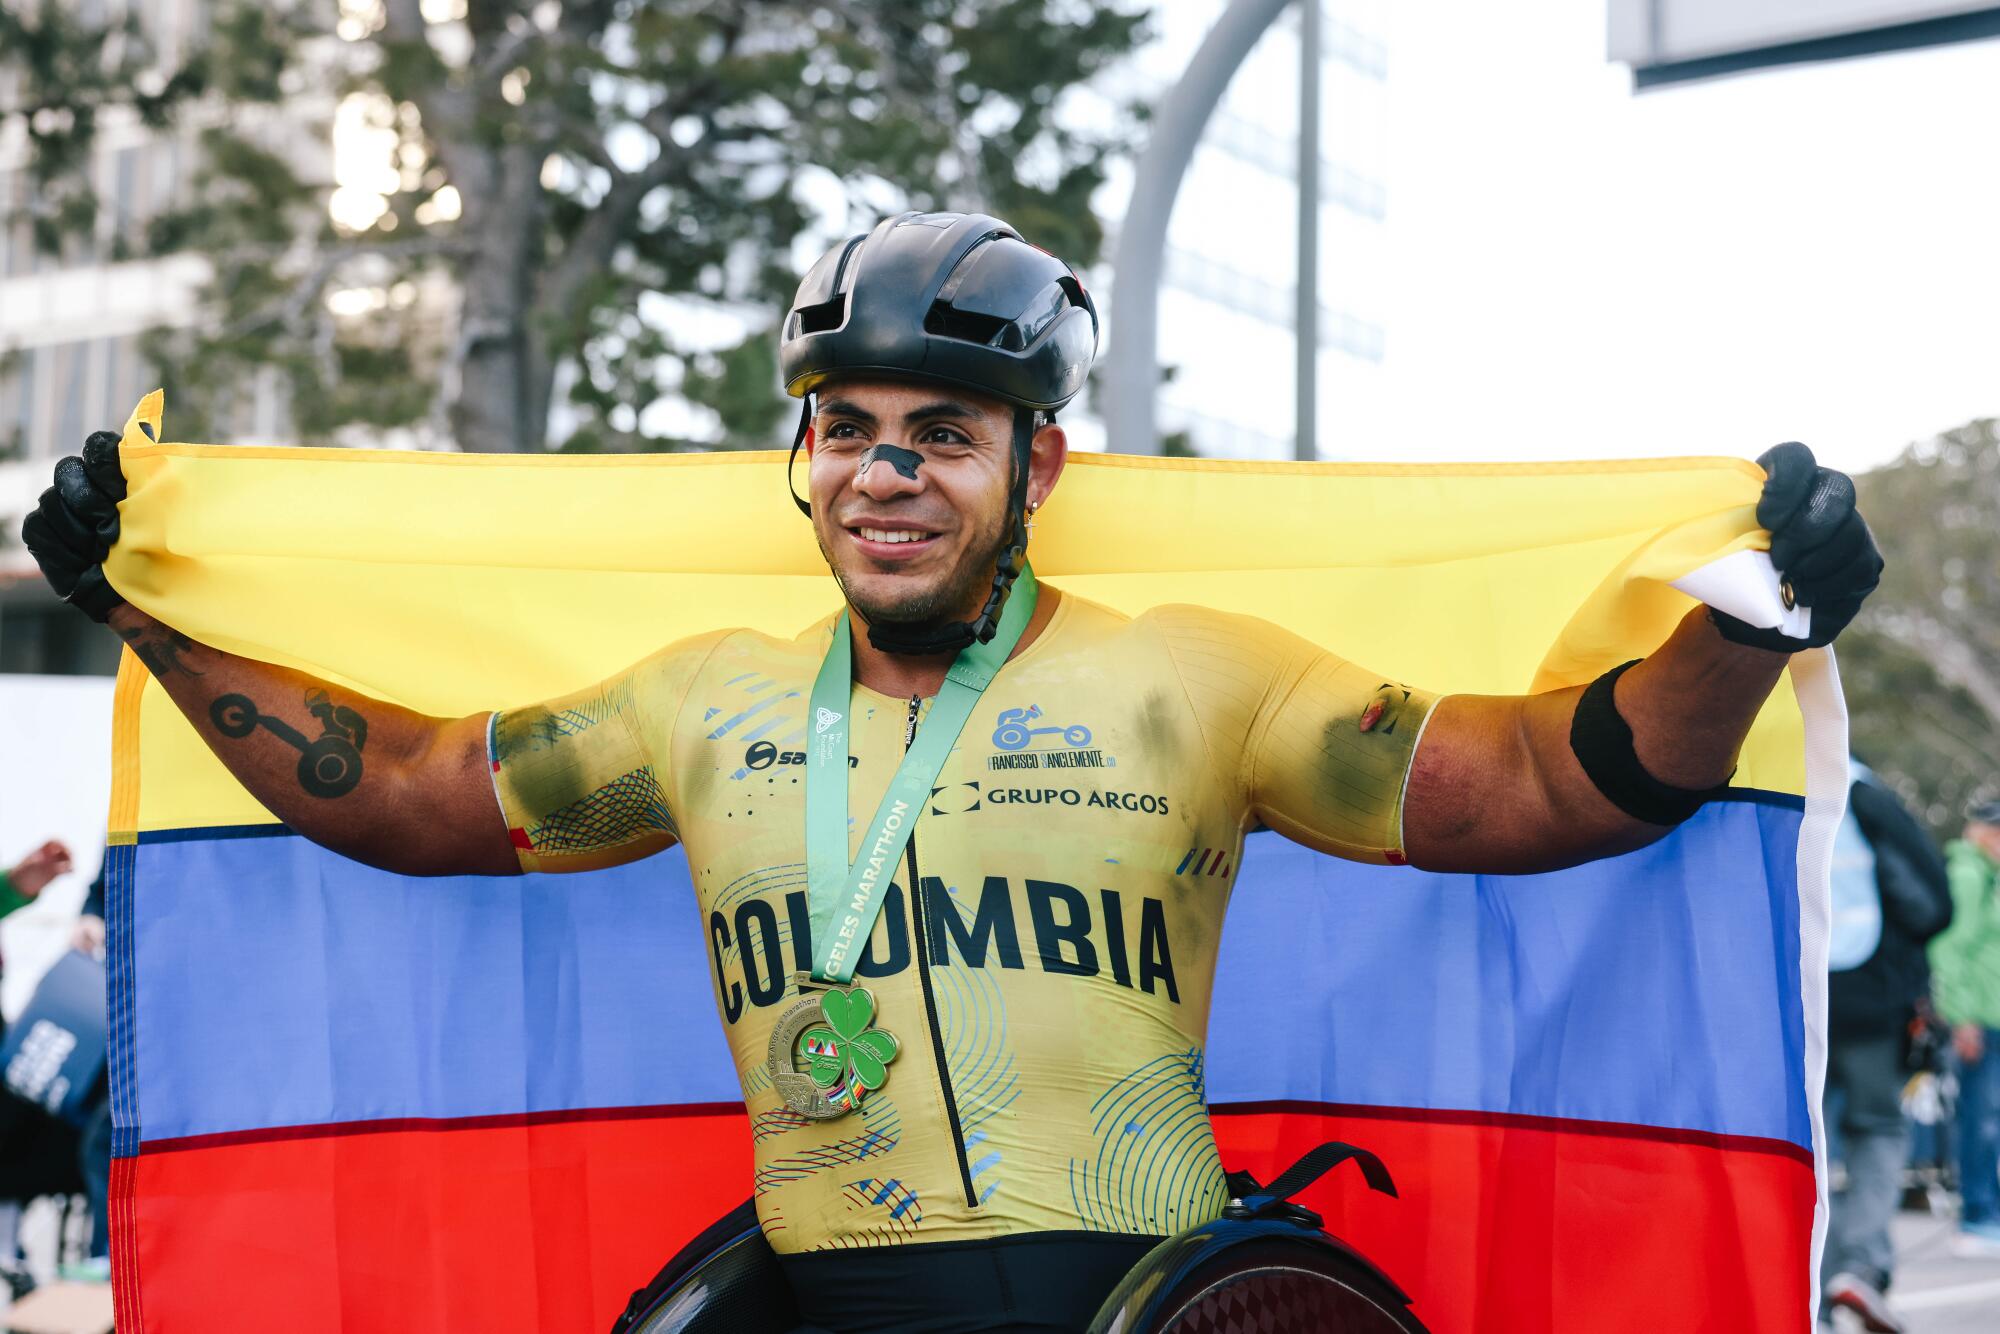 Francisco Sanclemente is the winner in a wheelchair.